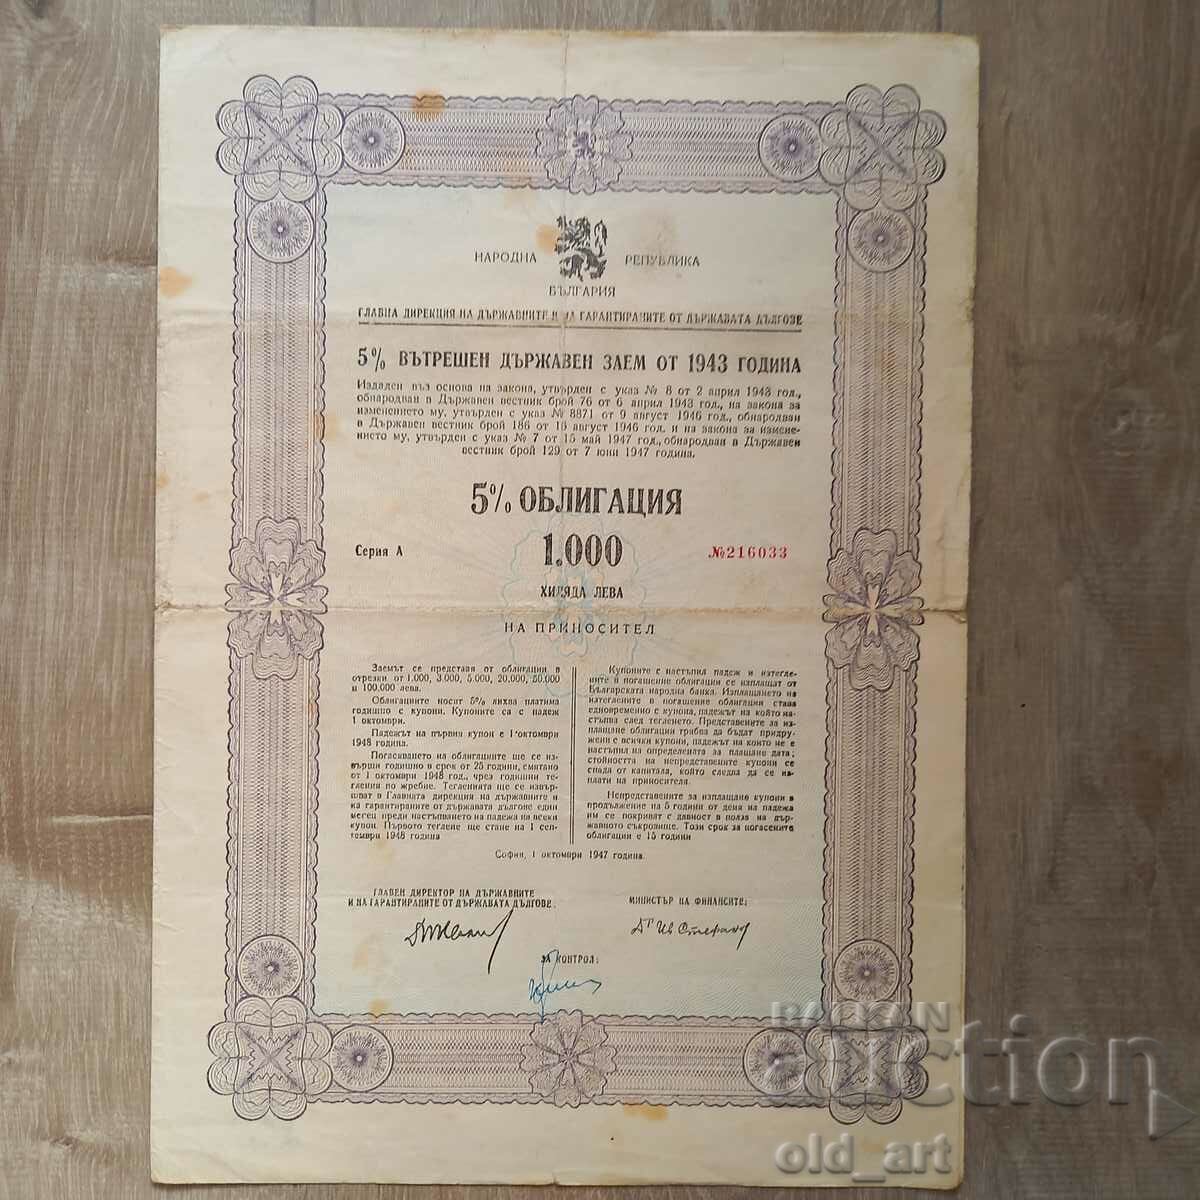 Bond 1000 BGN 1943. Internal state loan